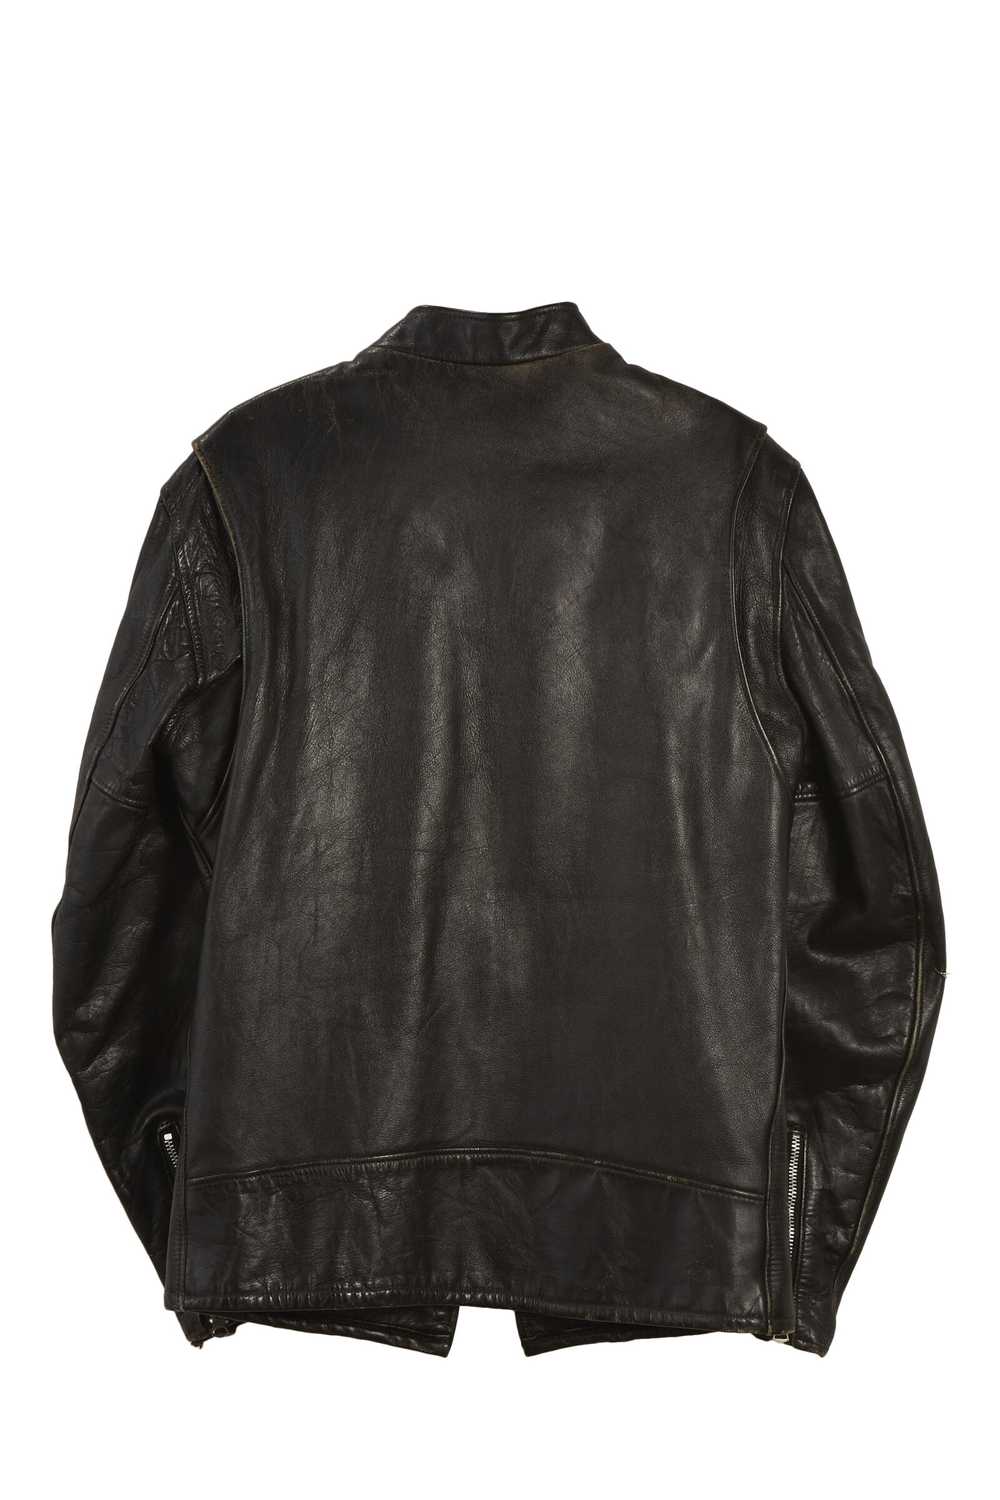 Black Leather Schott 1960s Jacket - image 2